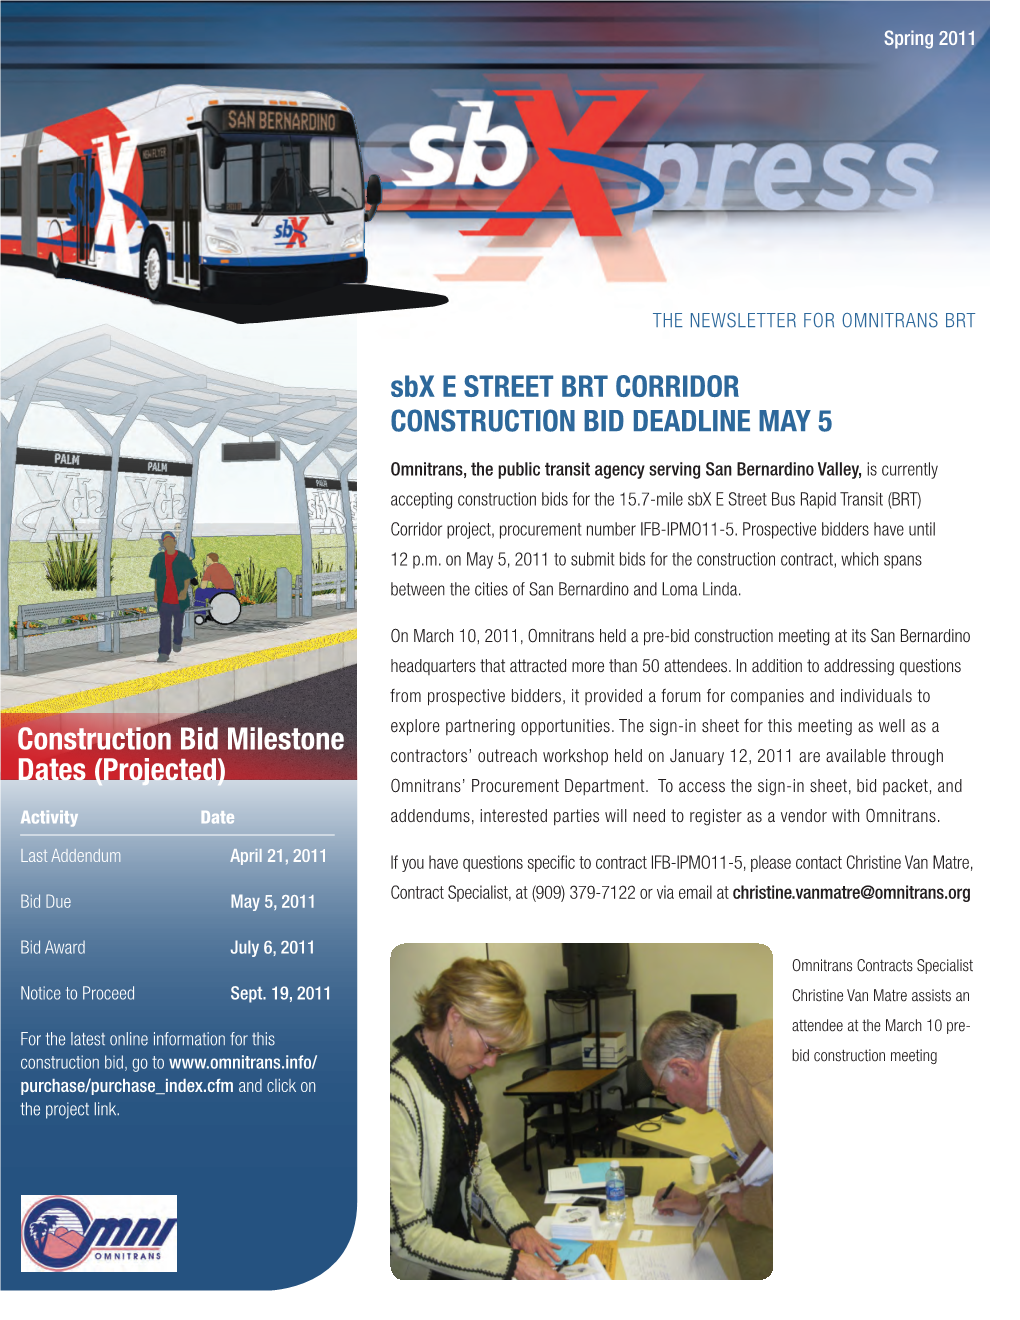 Sbx E Street BRT Corridor Construction Bid Deadline May 5